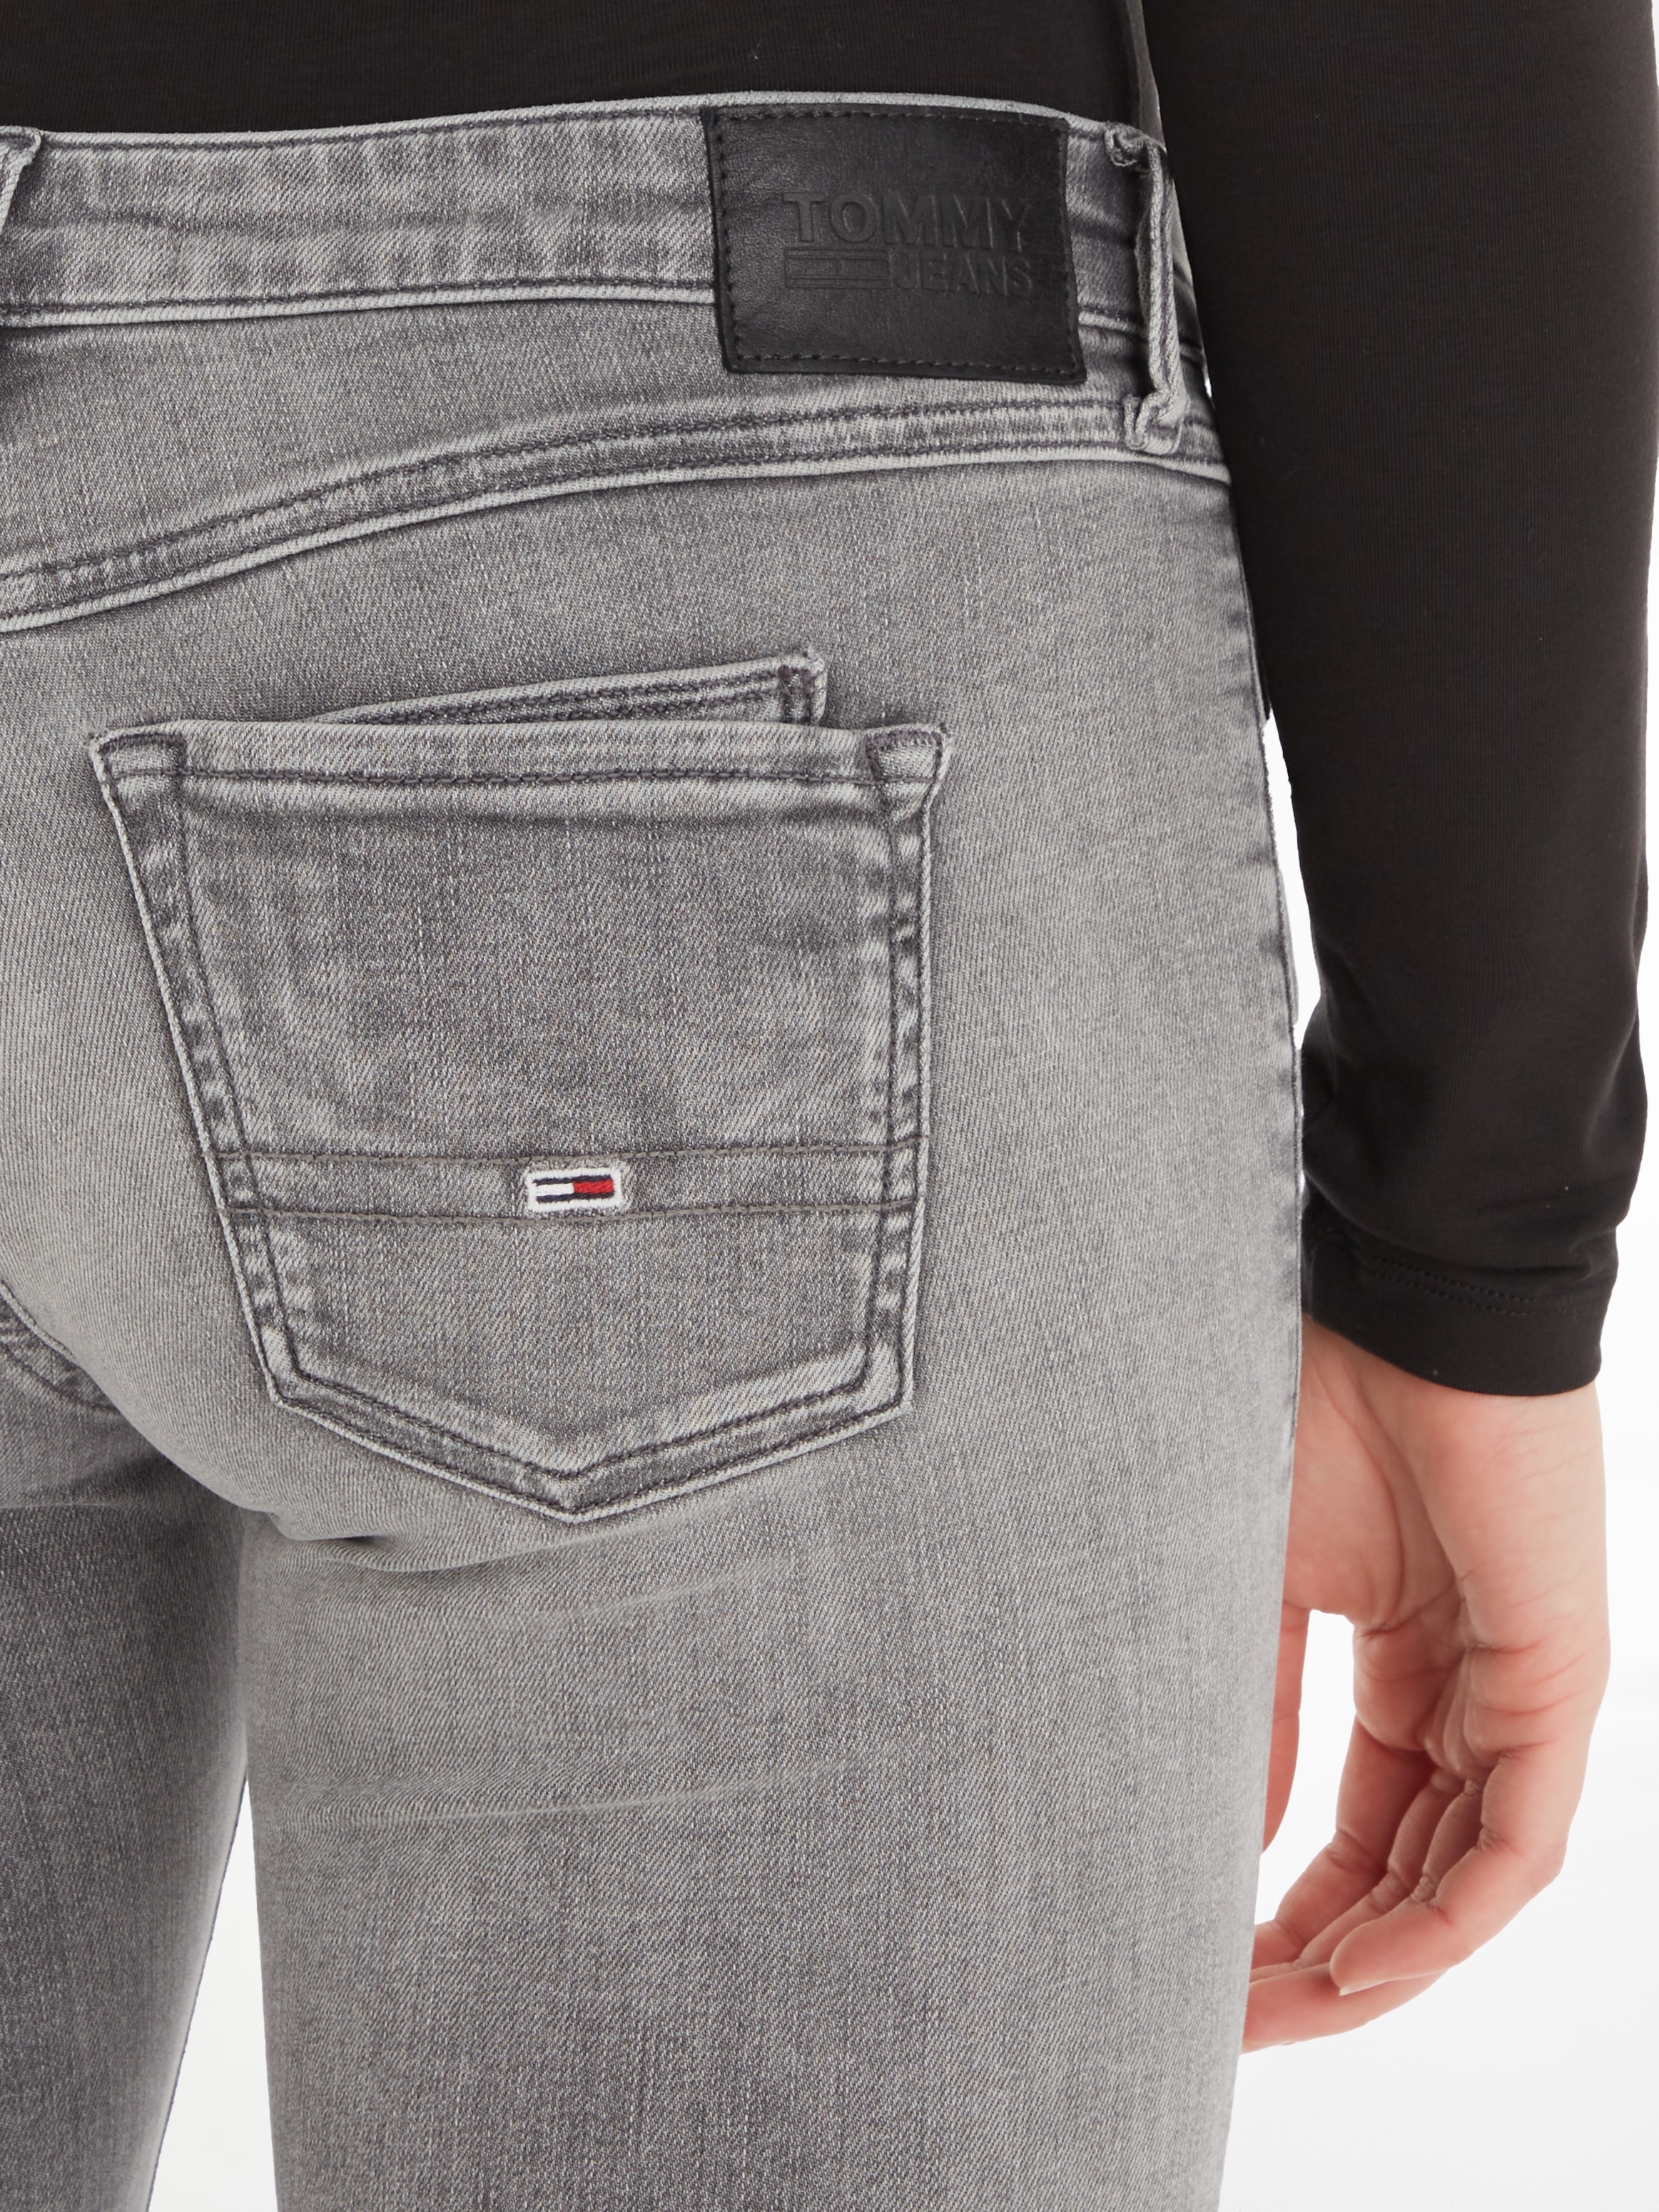 Tommy Jeans Skinny-fit-Jeans »Scarlett«, mit gestickter Tommy Jeans Flag an der Münztasche